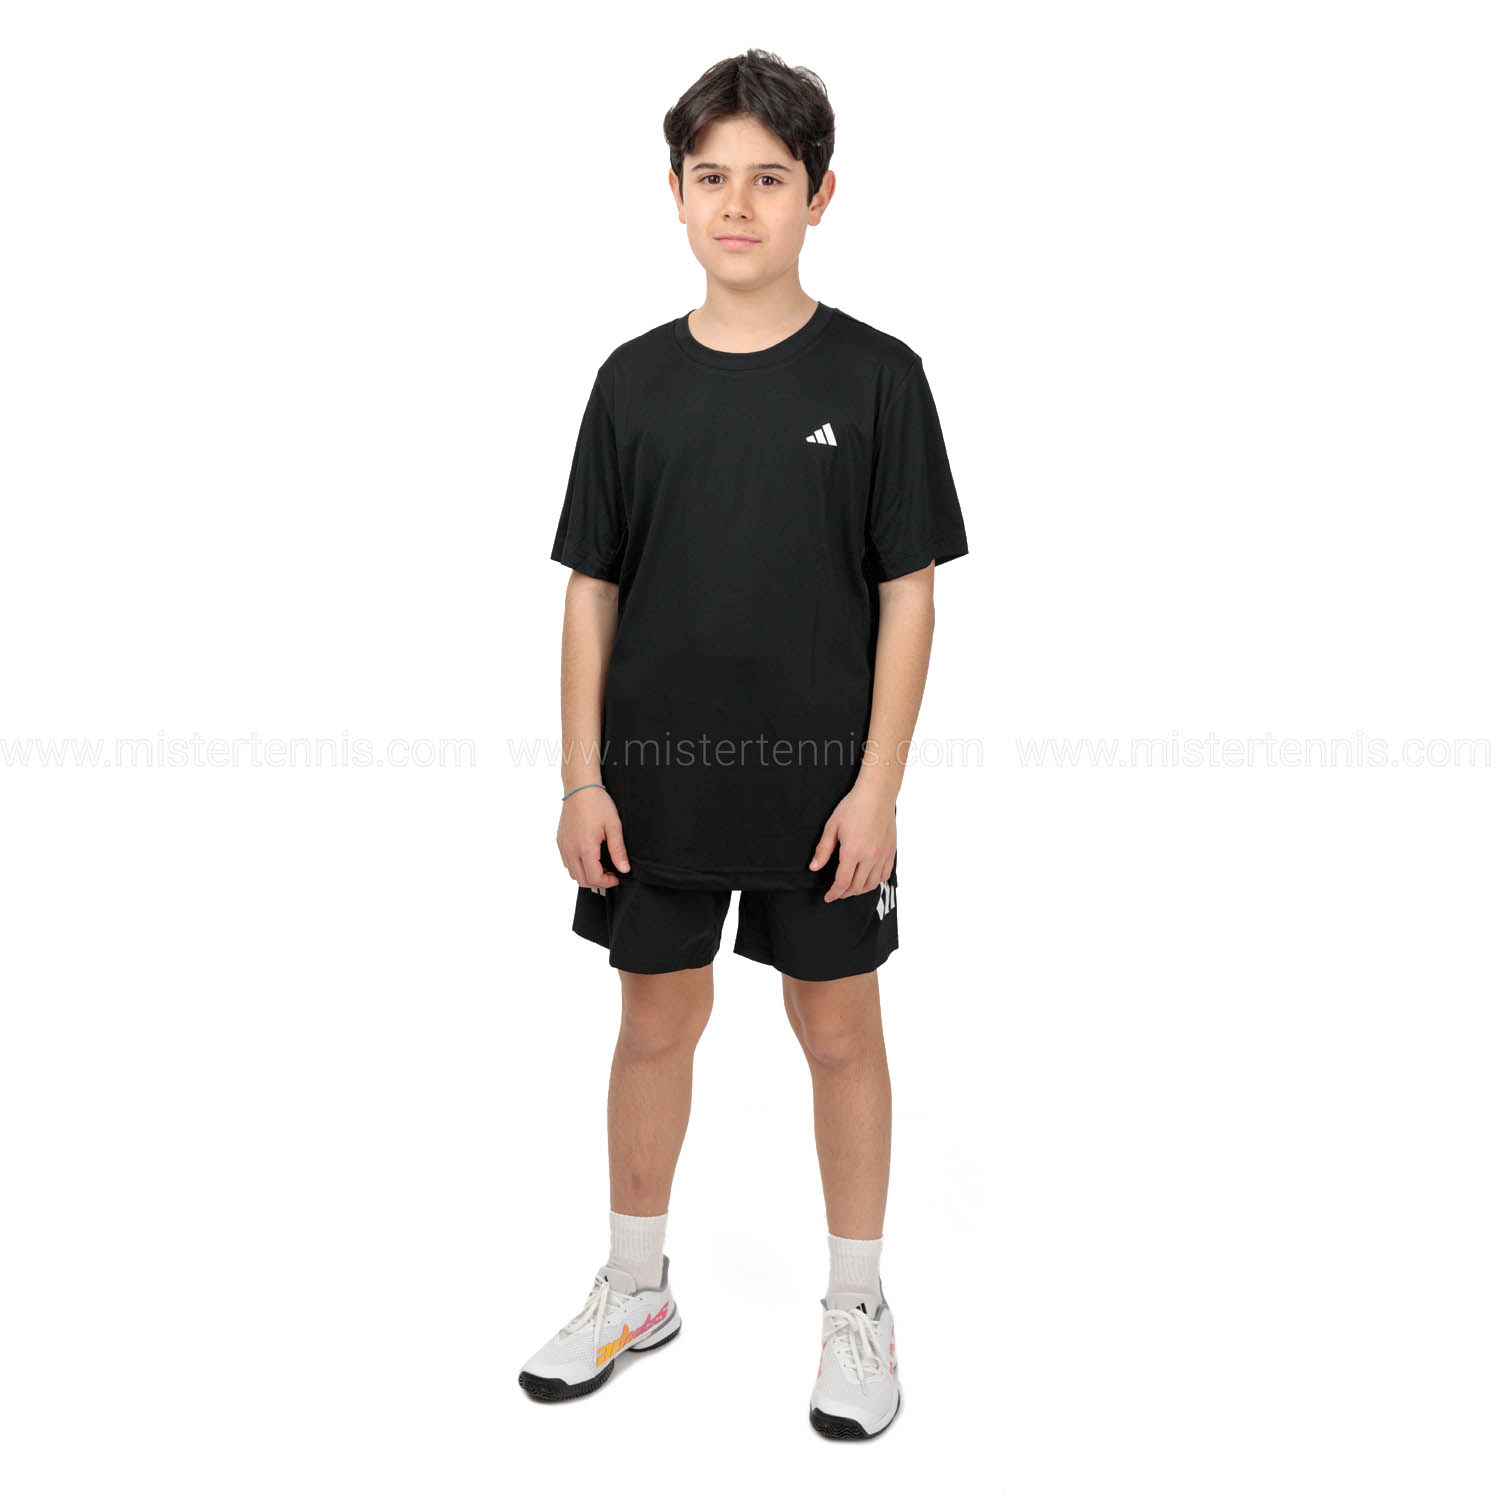 adidas Club Performance T-Shirt Boy - Black